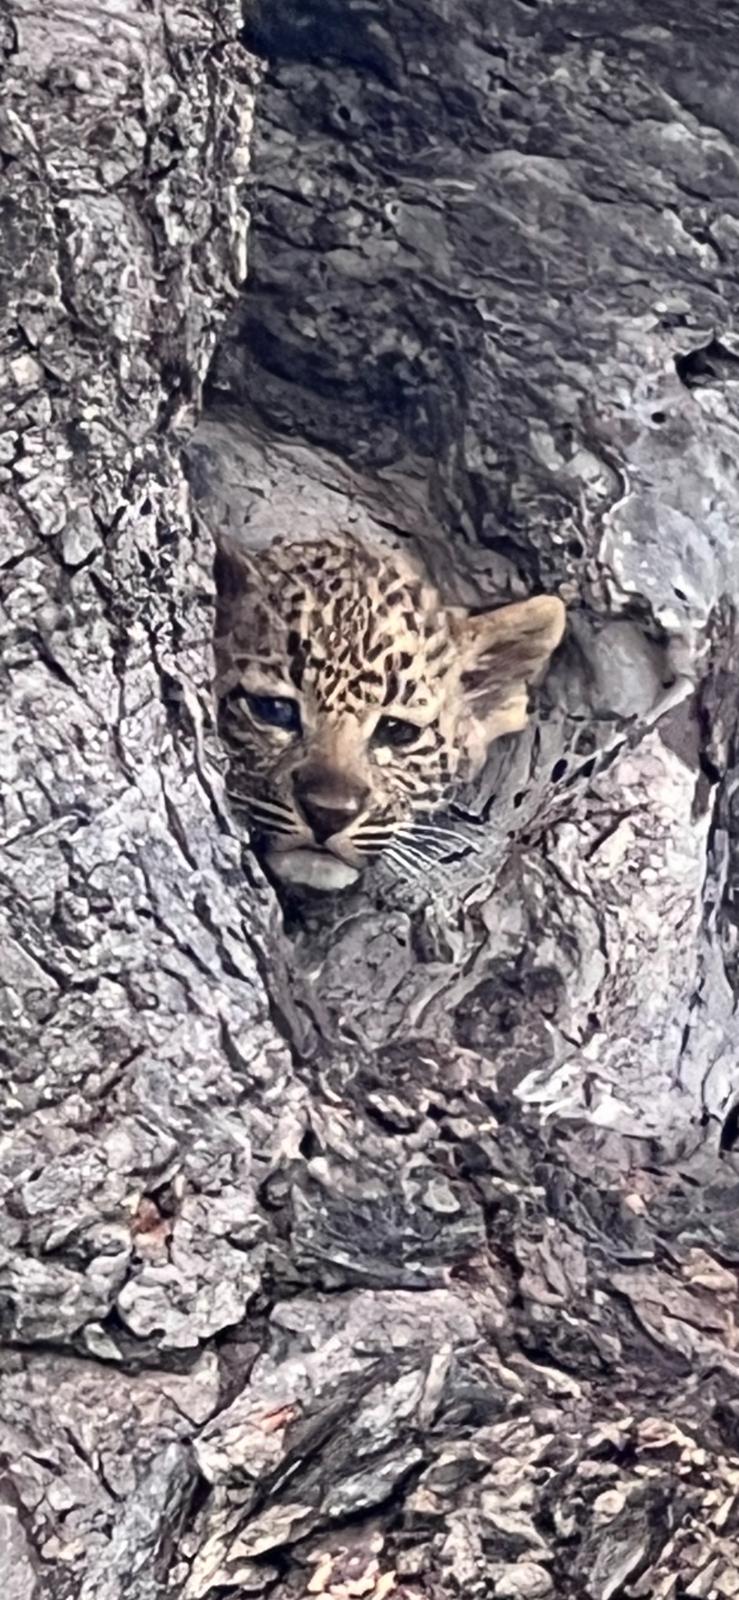 eopard-cub-in-tree